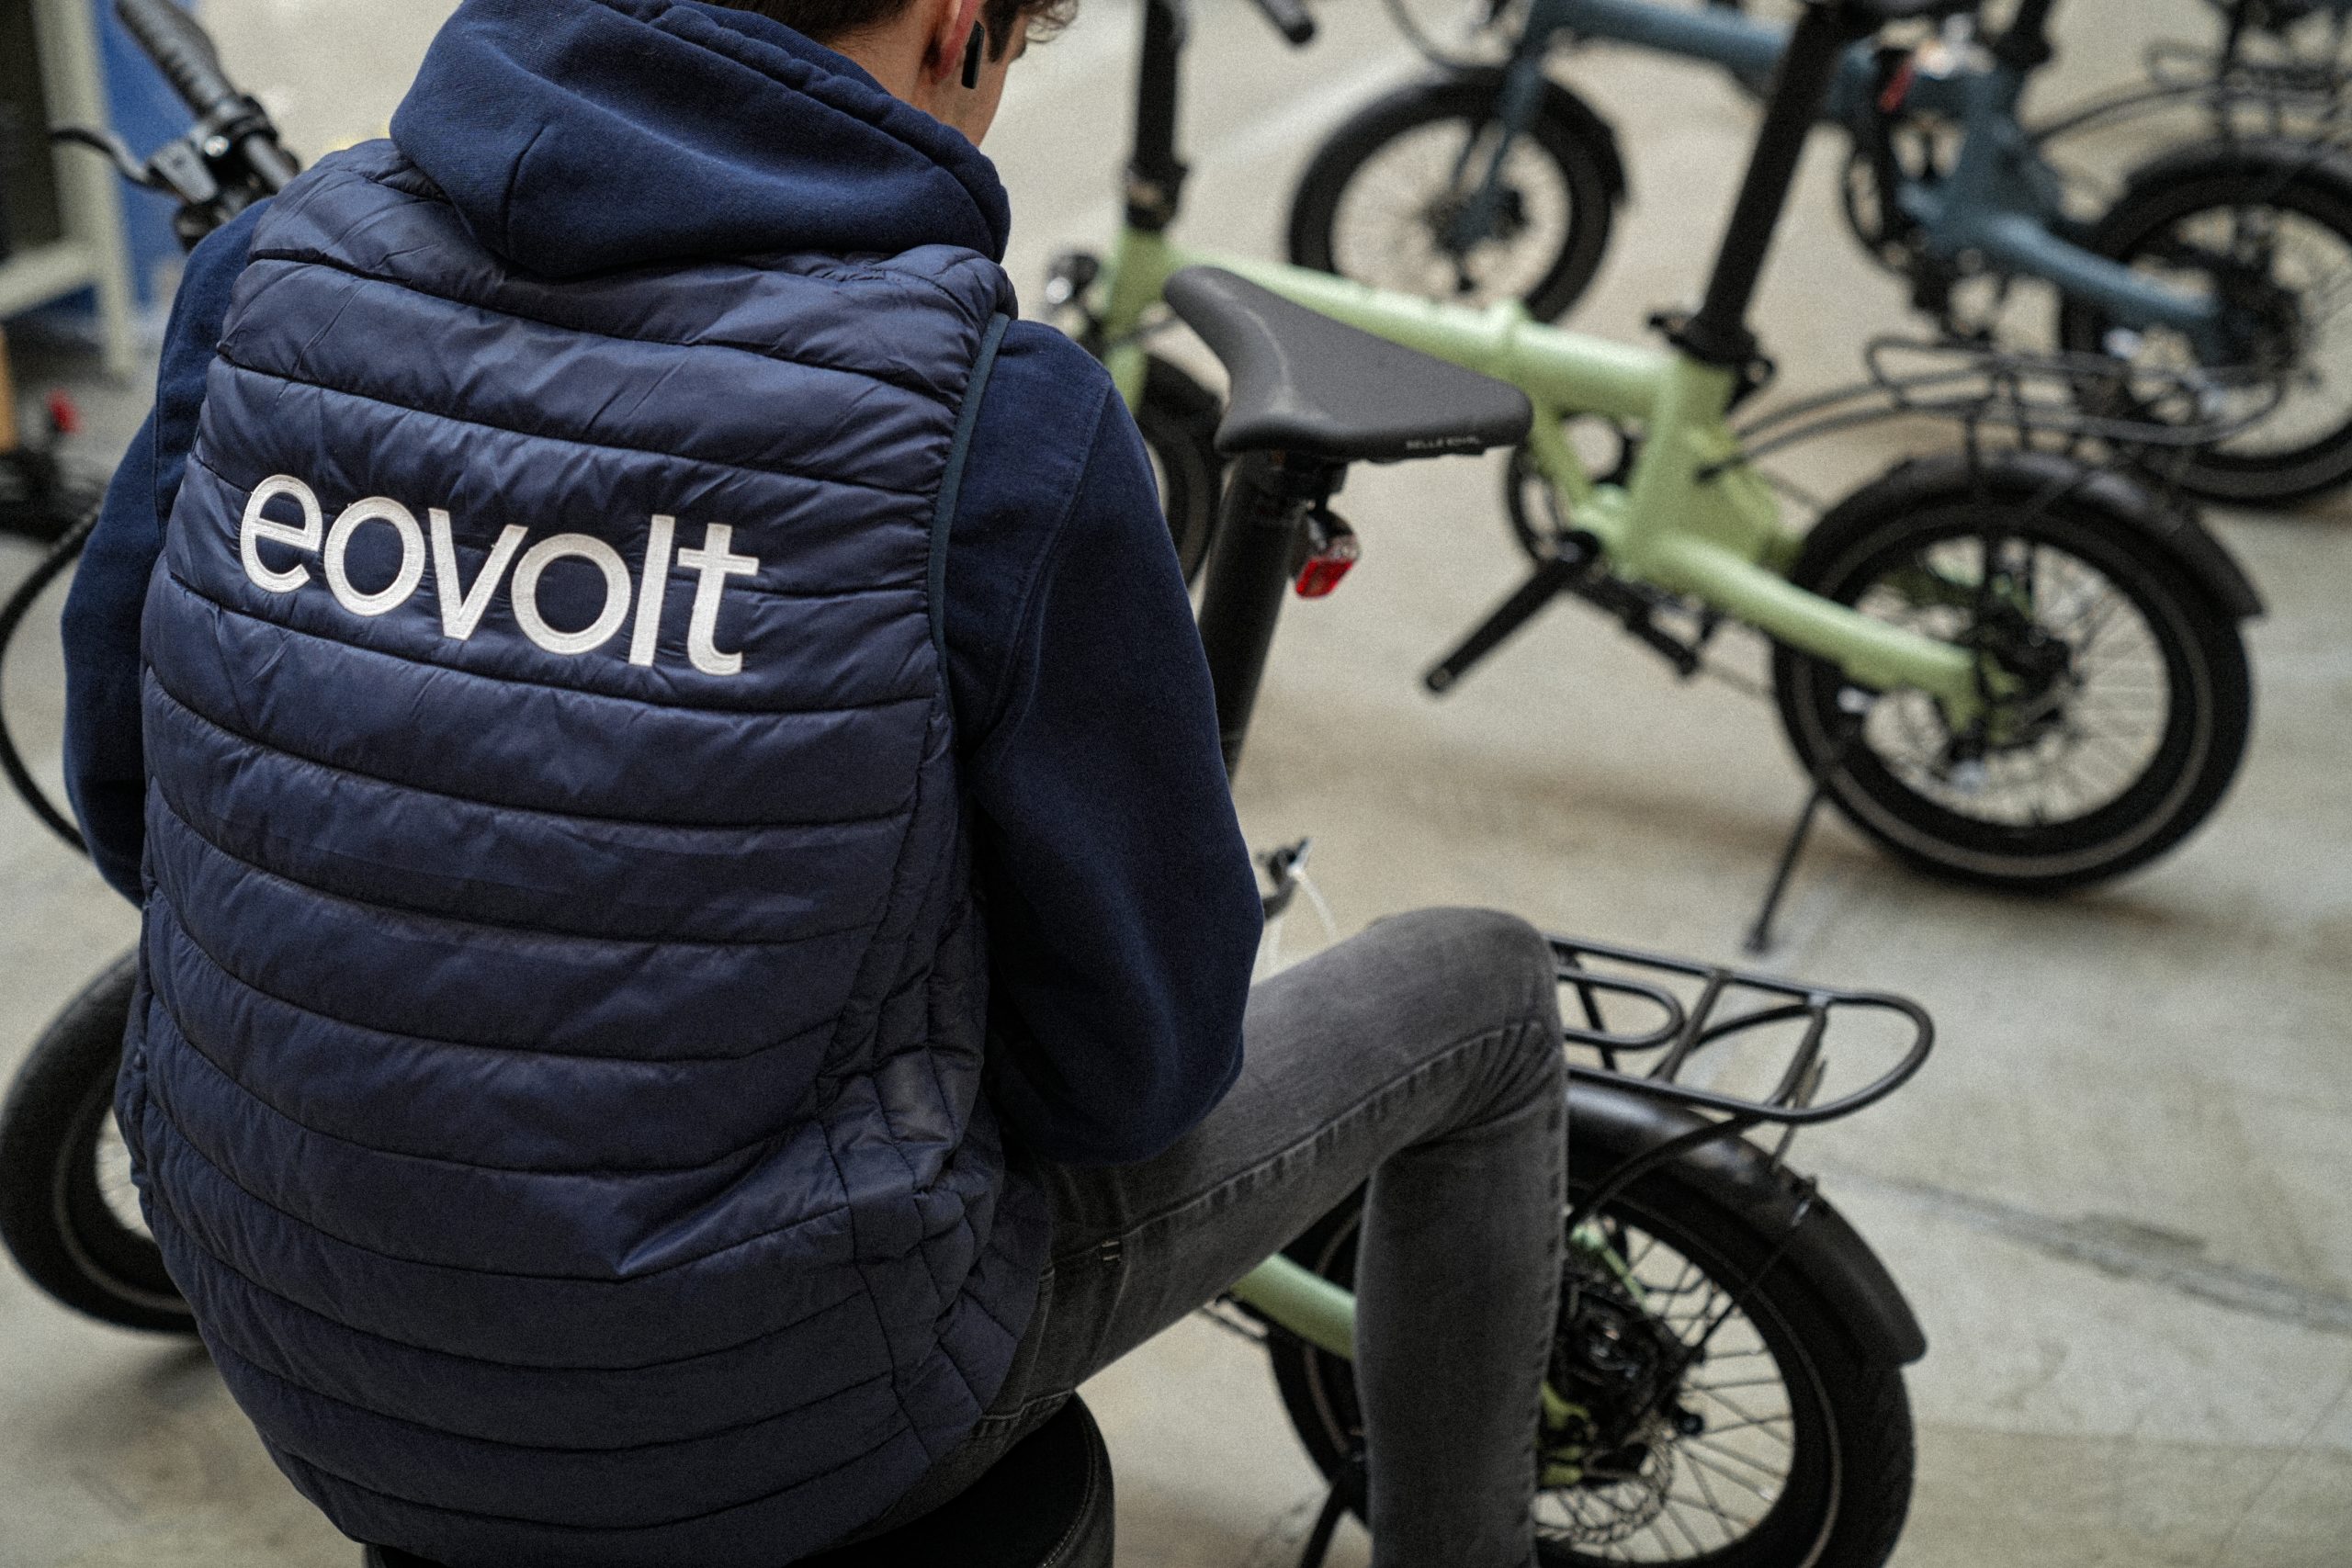 Made in France : Bikebiz visite le siège d'Eovolt à Lyon – Dossiers